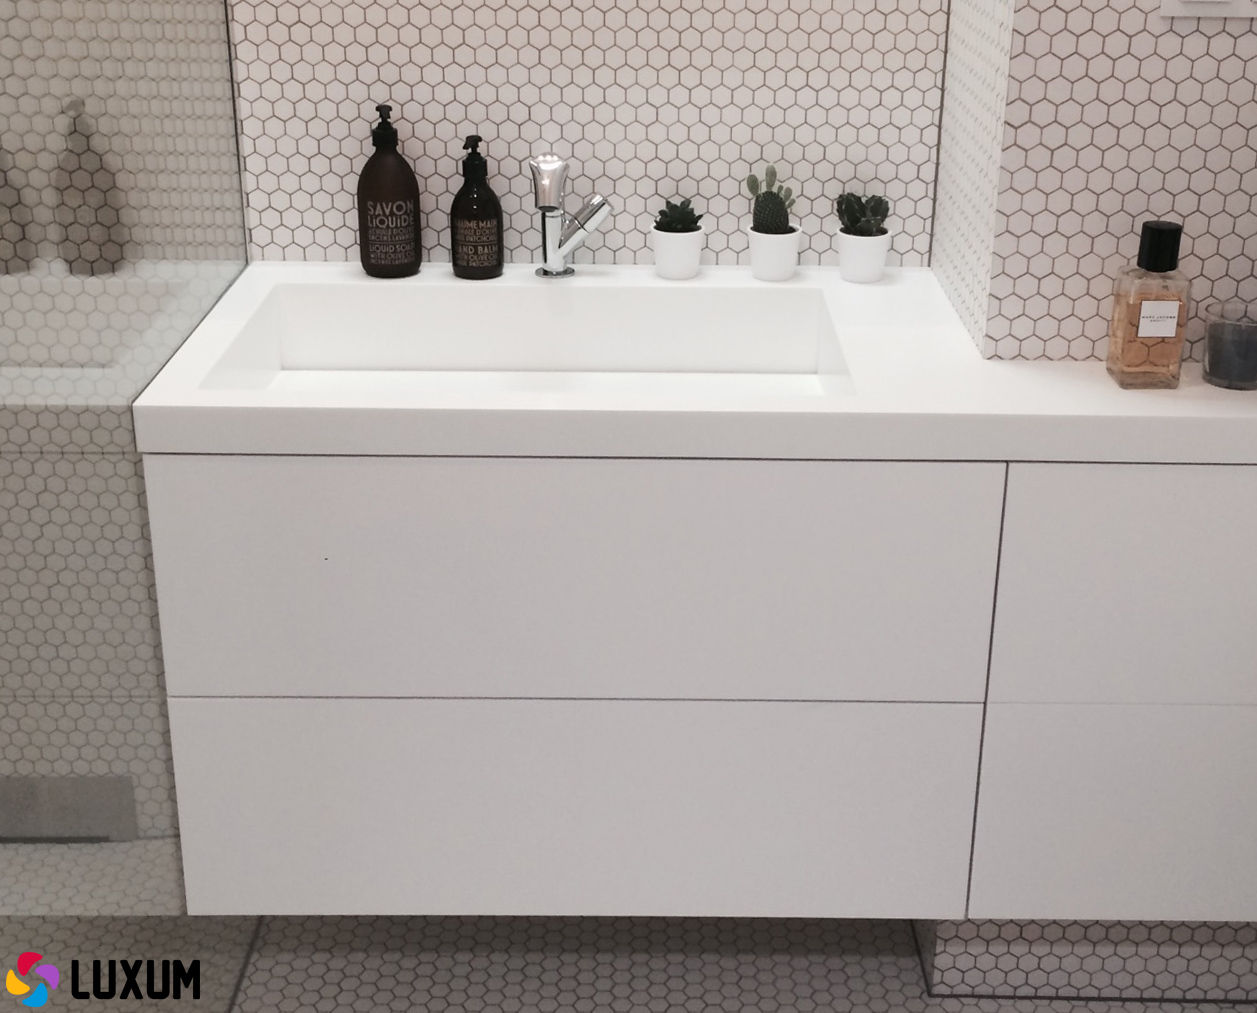 Minimalistyczna umywalka od Luxum, Luxum Luxum Bathroom